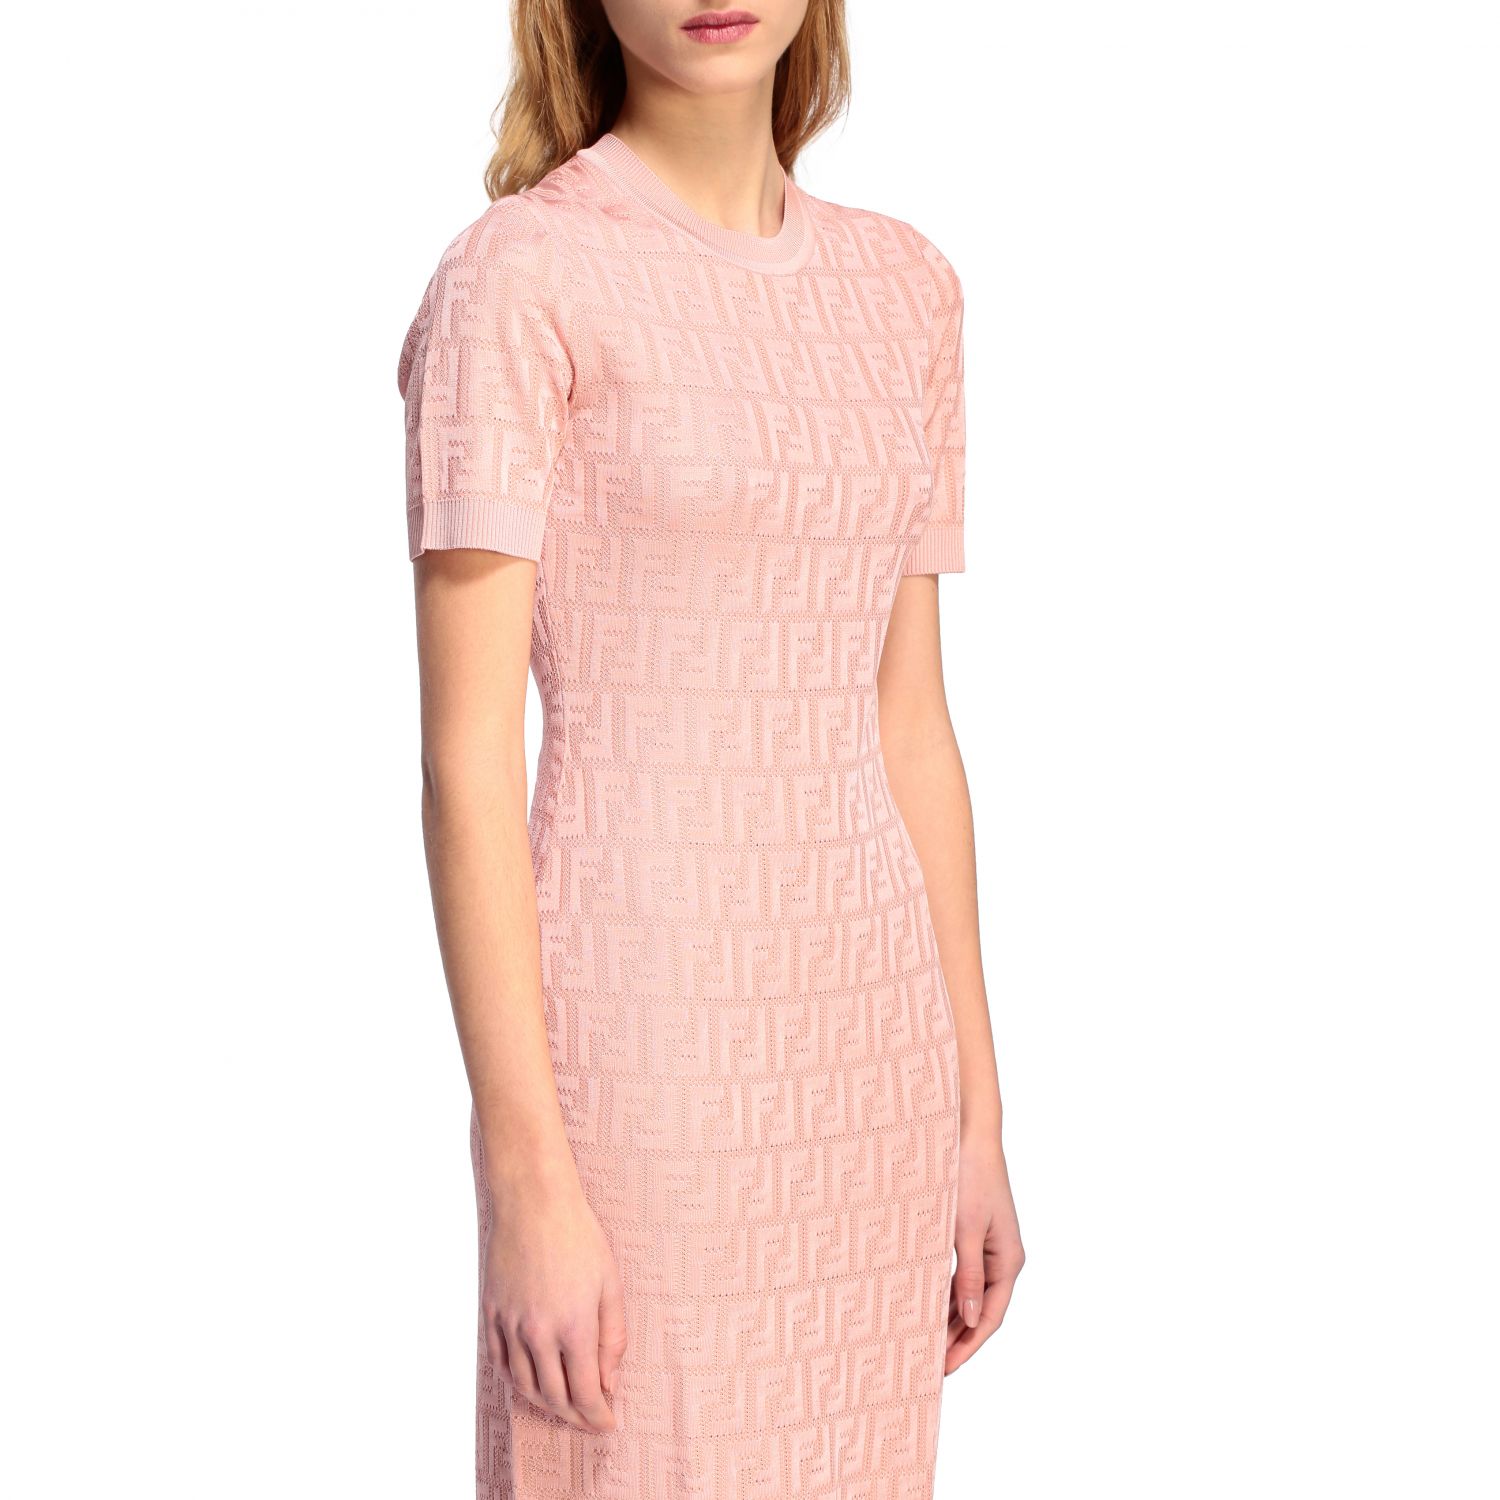 FENDI: sheath dress with all over FF monogram | Dress Fendi Women Pink